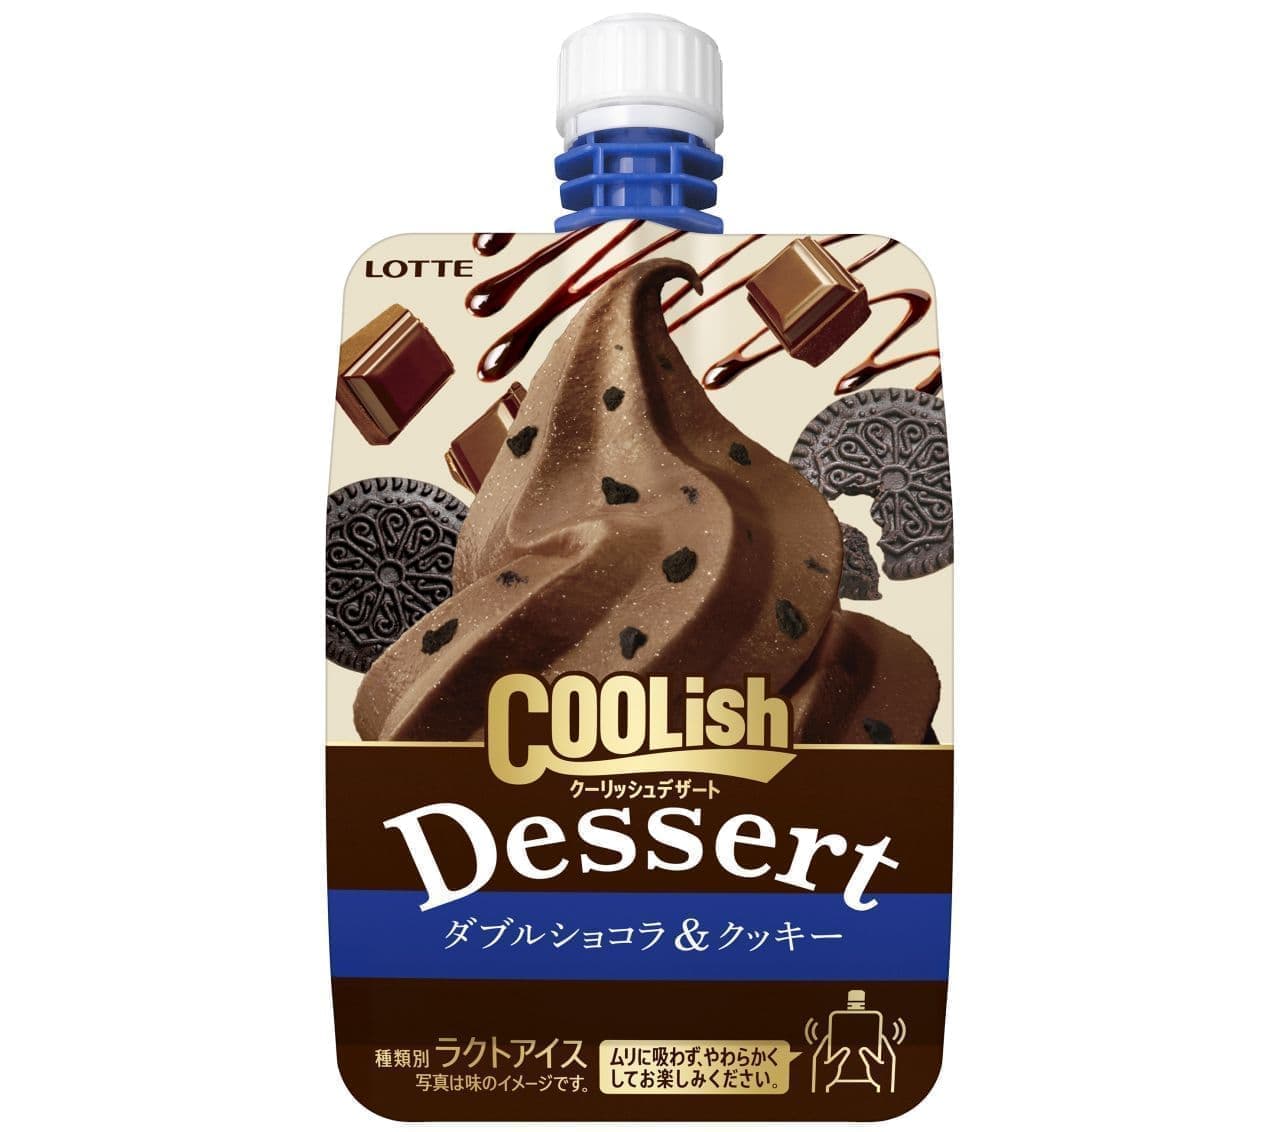 Lotte "Coolish Dessert Double Chocolat & Cookies"